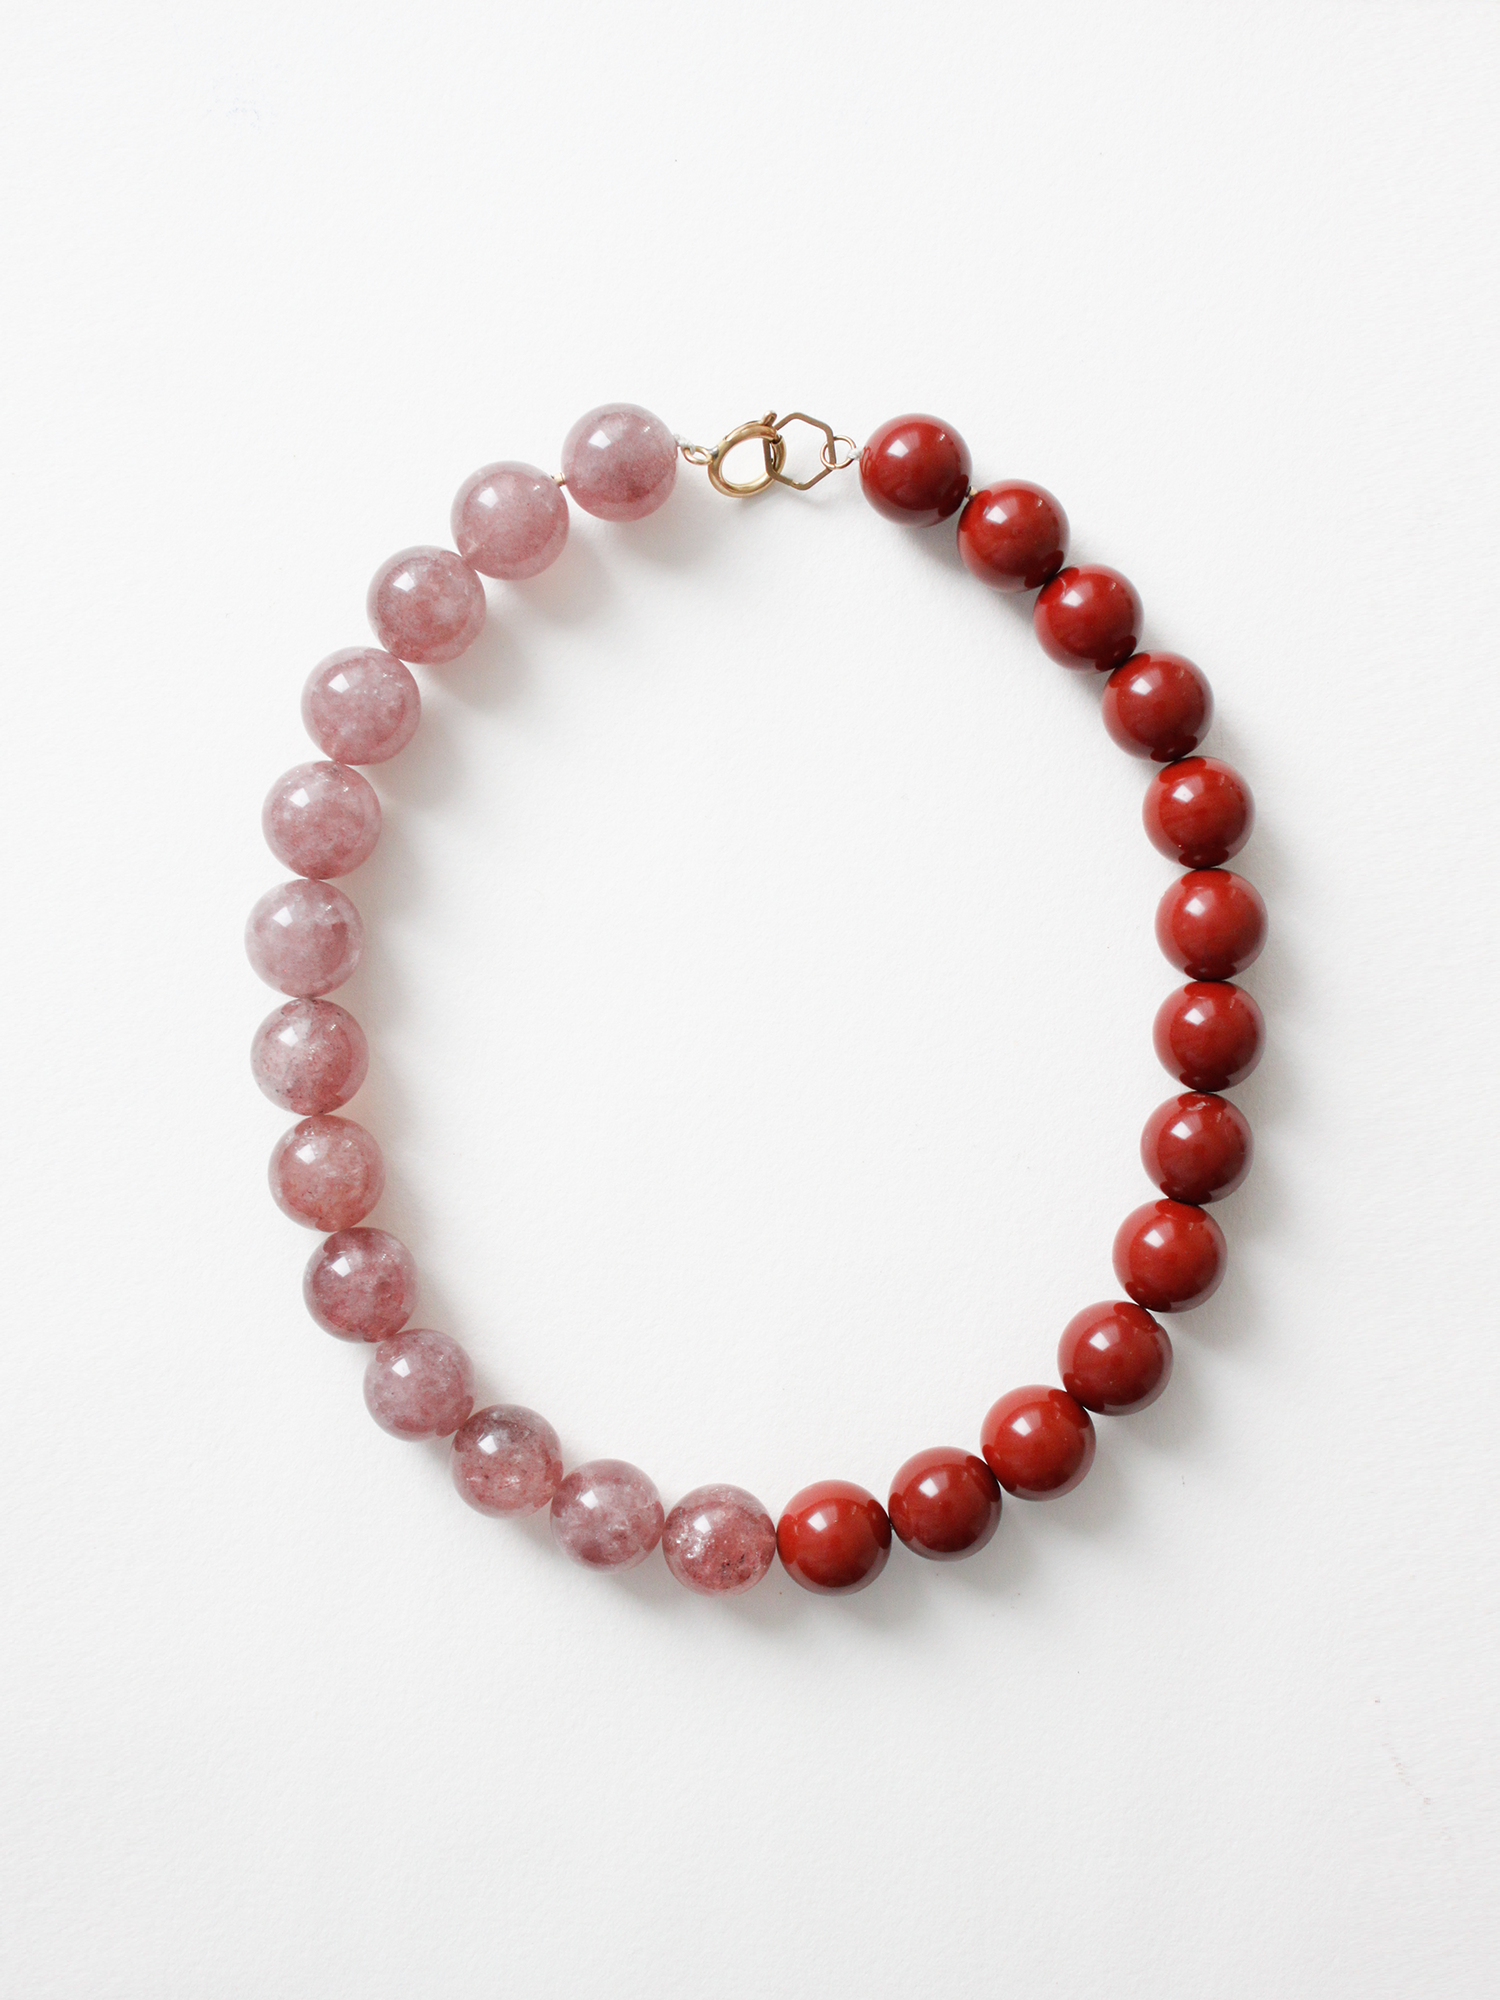 Stone Necklace - Strawberry Quartz meets Red Jasper